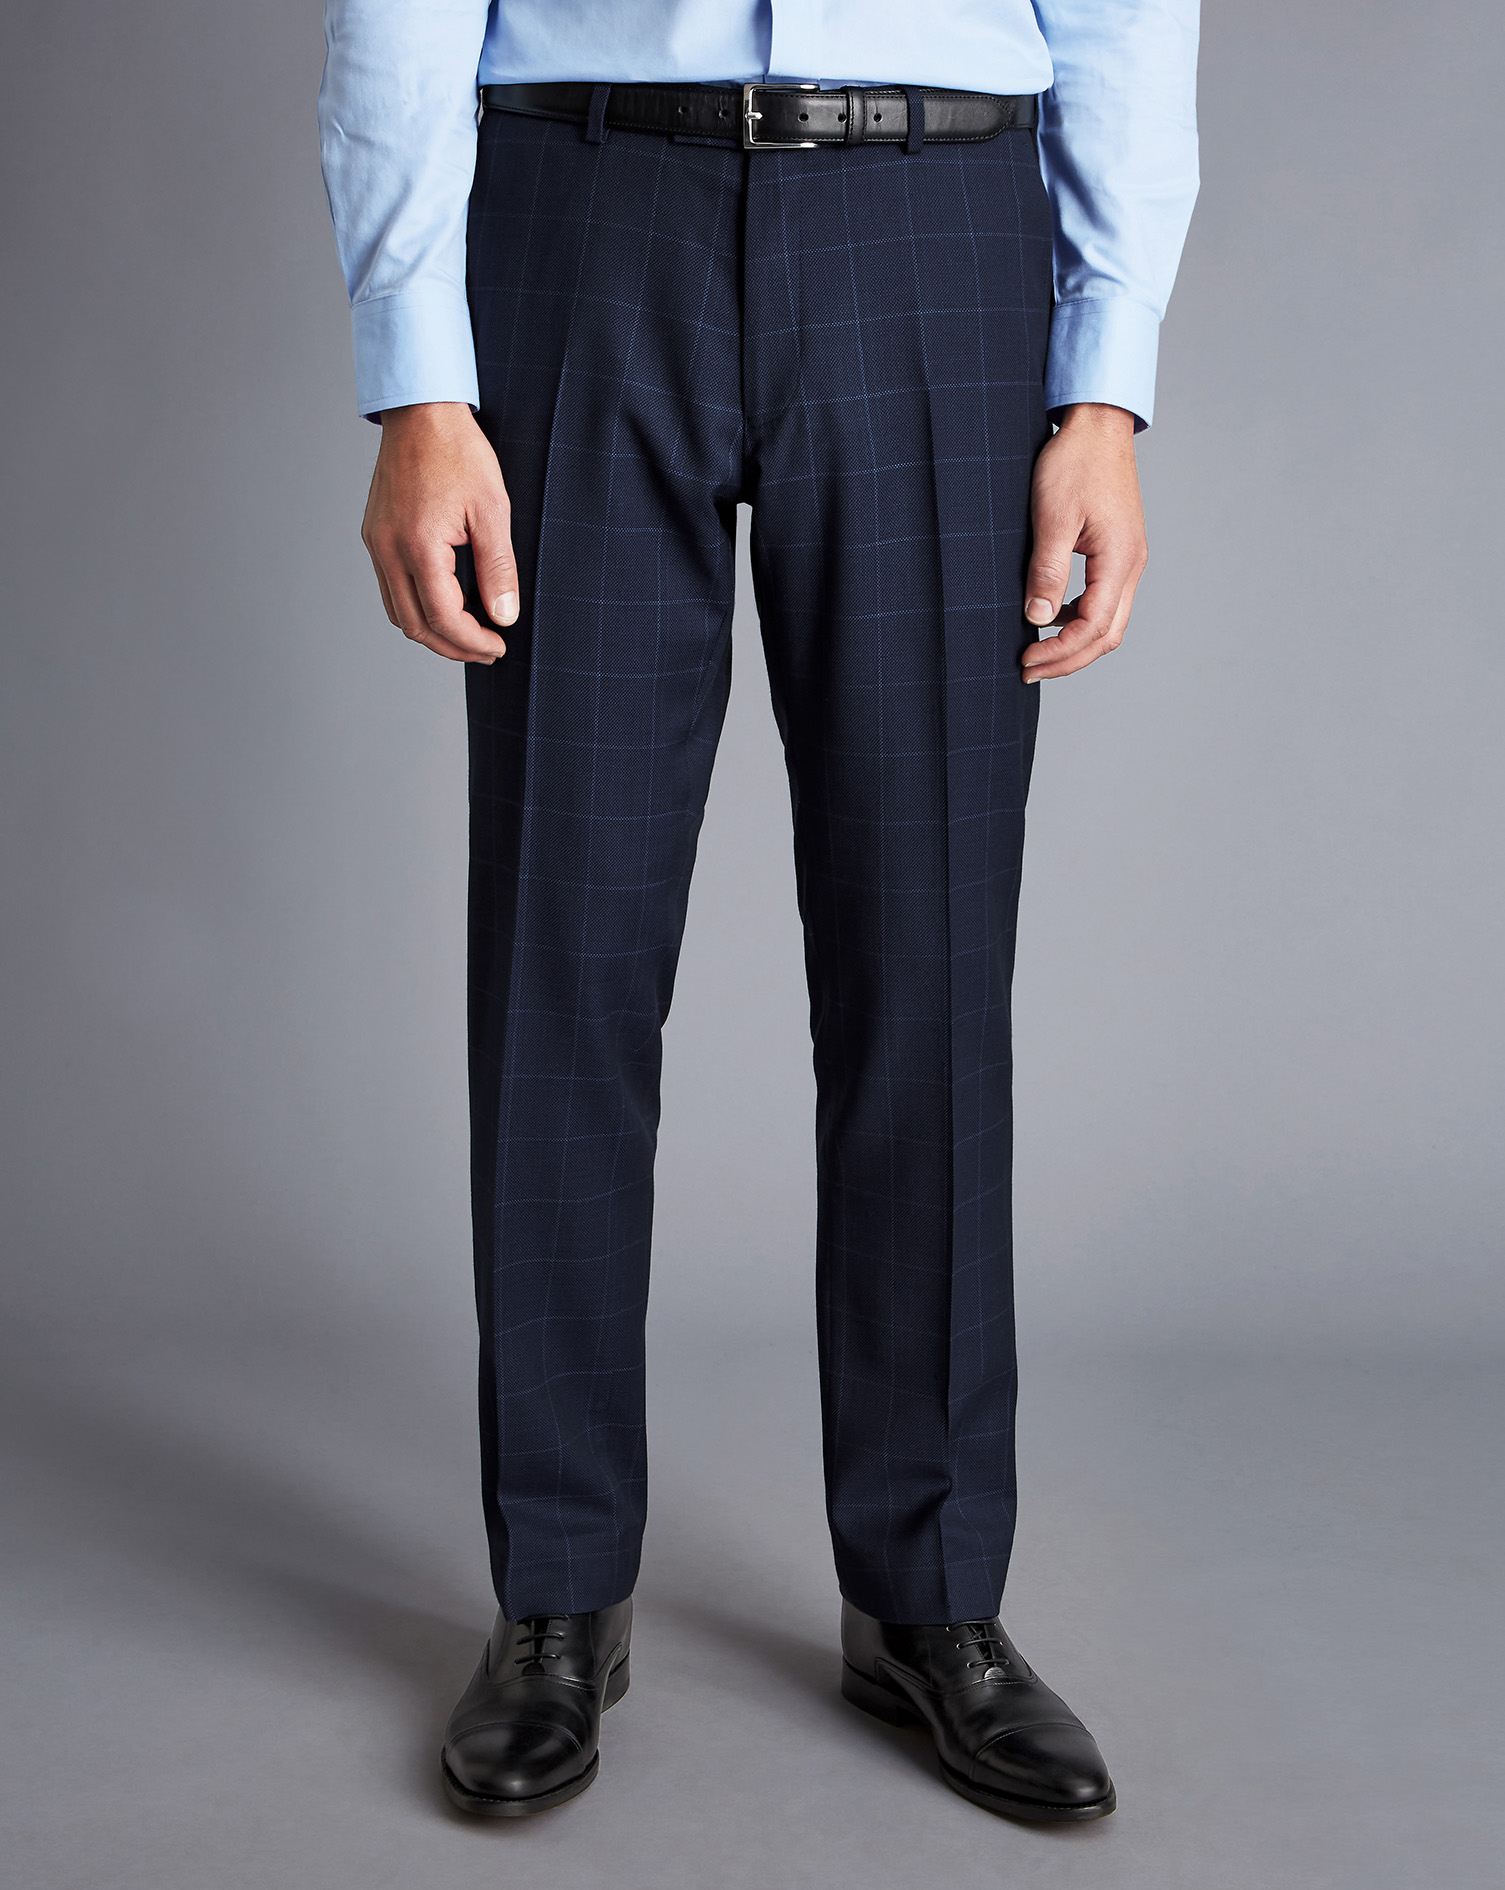 Men's Charles Tyrwhitt Windowpane Check Birdseye Travel Suit Trousers - Navy Blue Size 38/32 Wool
